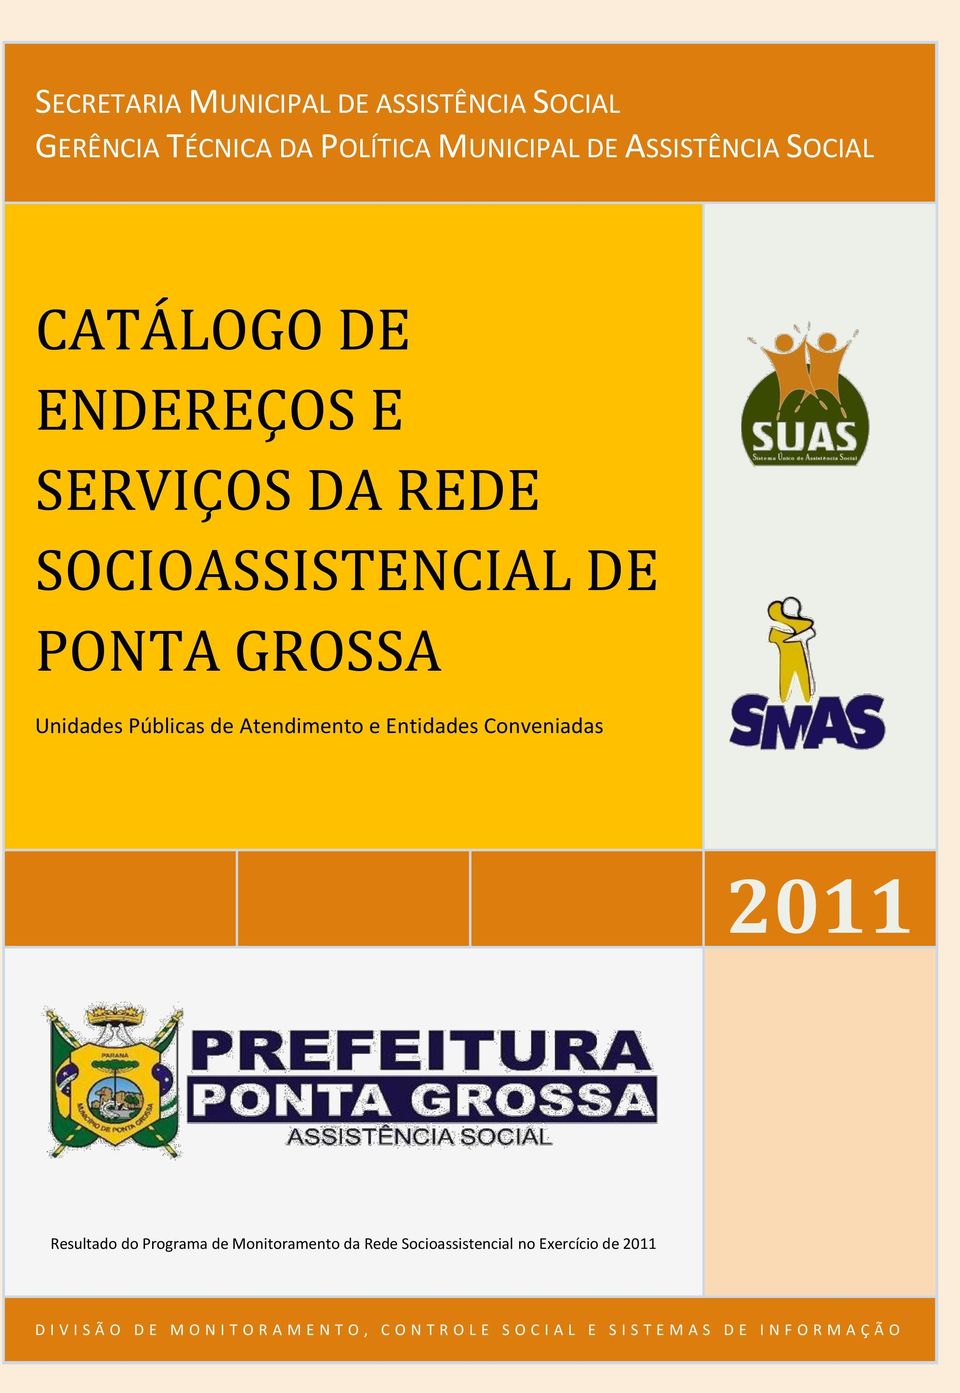 Entidades Conveniadas 2011 Resultado do Programa de Monitoramento da Rede Socioassistencial no Exercício de